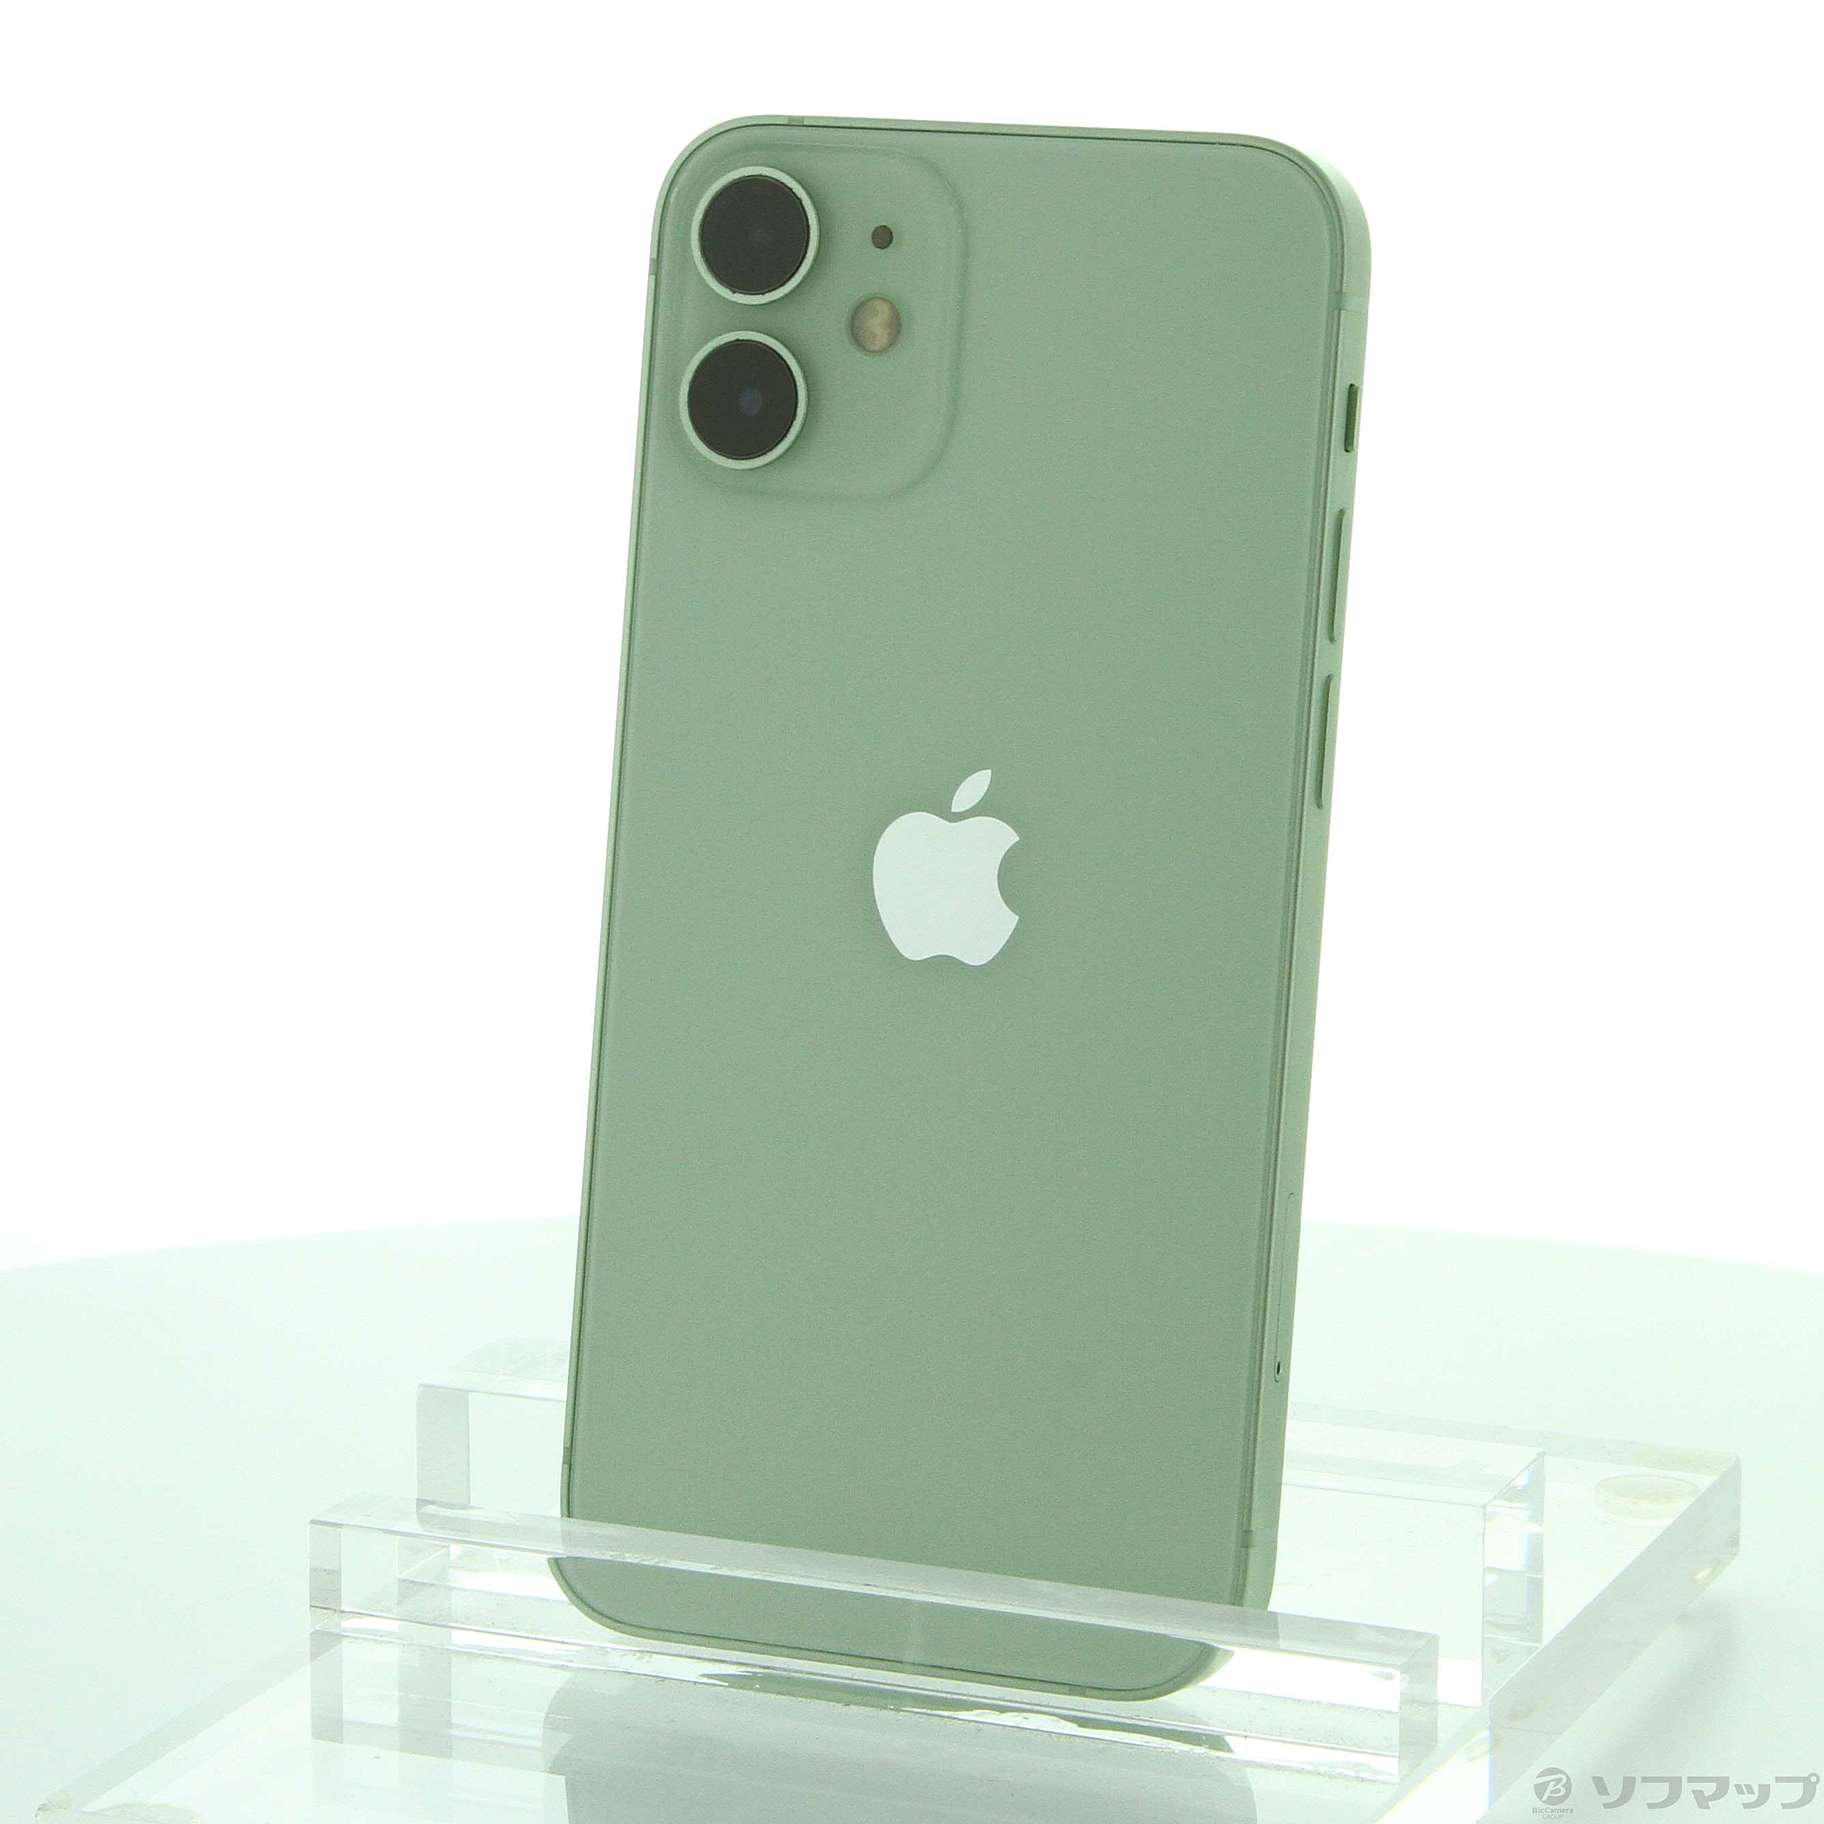 【新品】iPhone 12 mini 64GB au版 SIMフリー Green